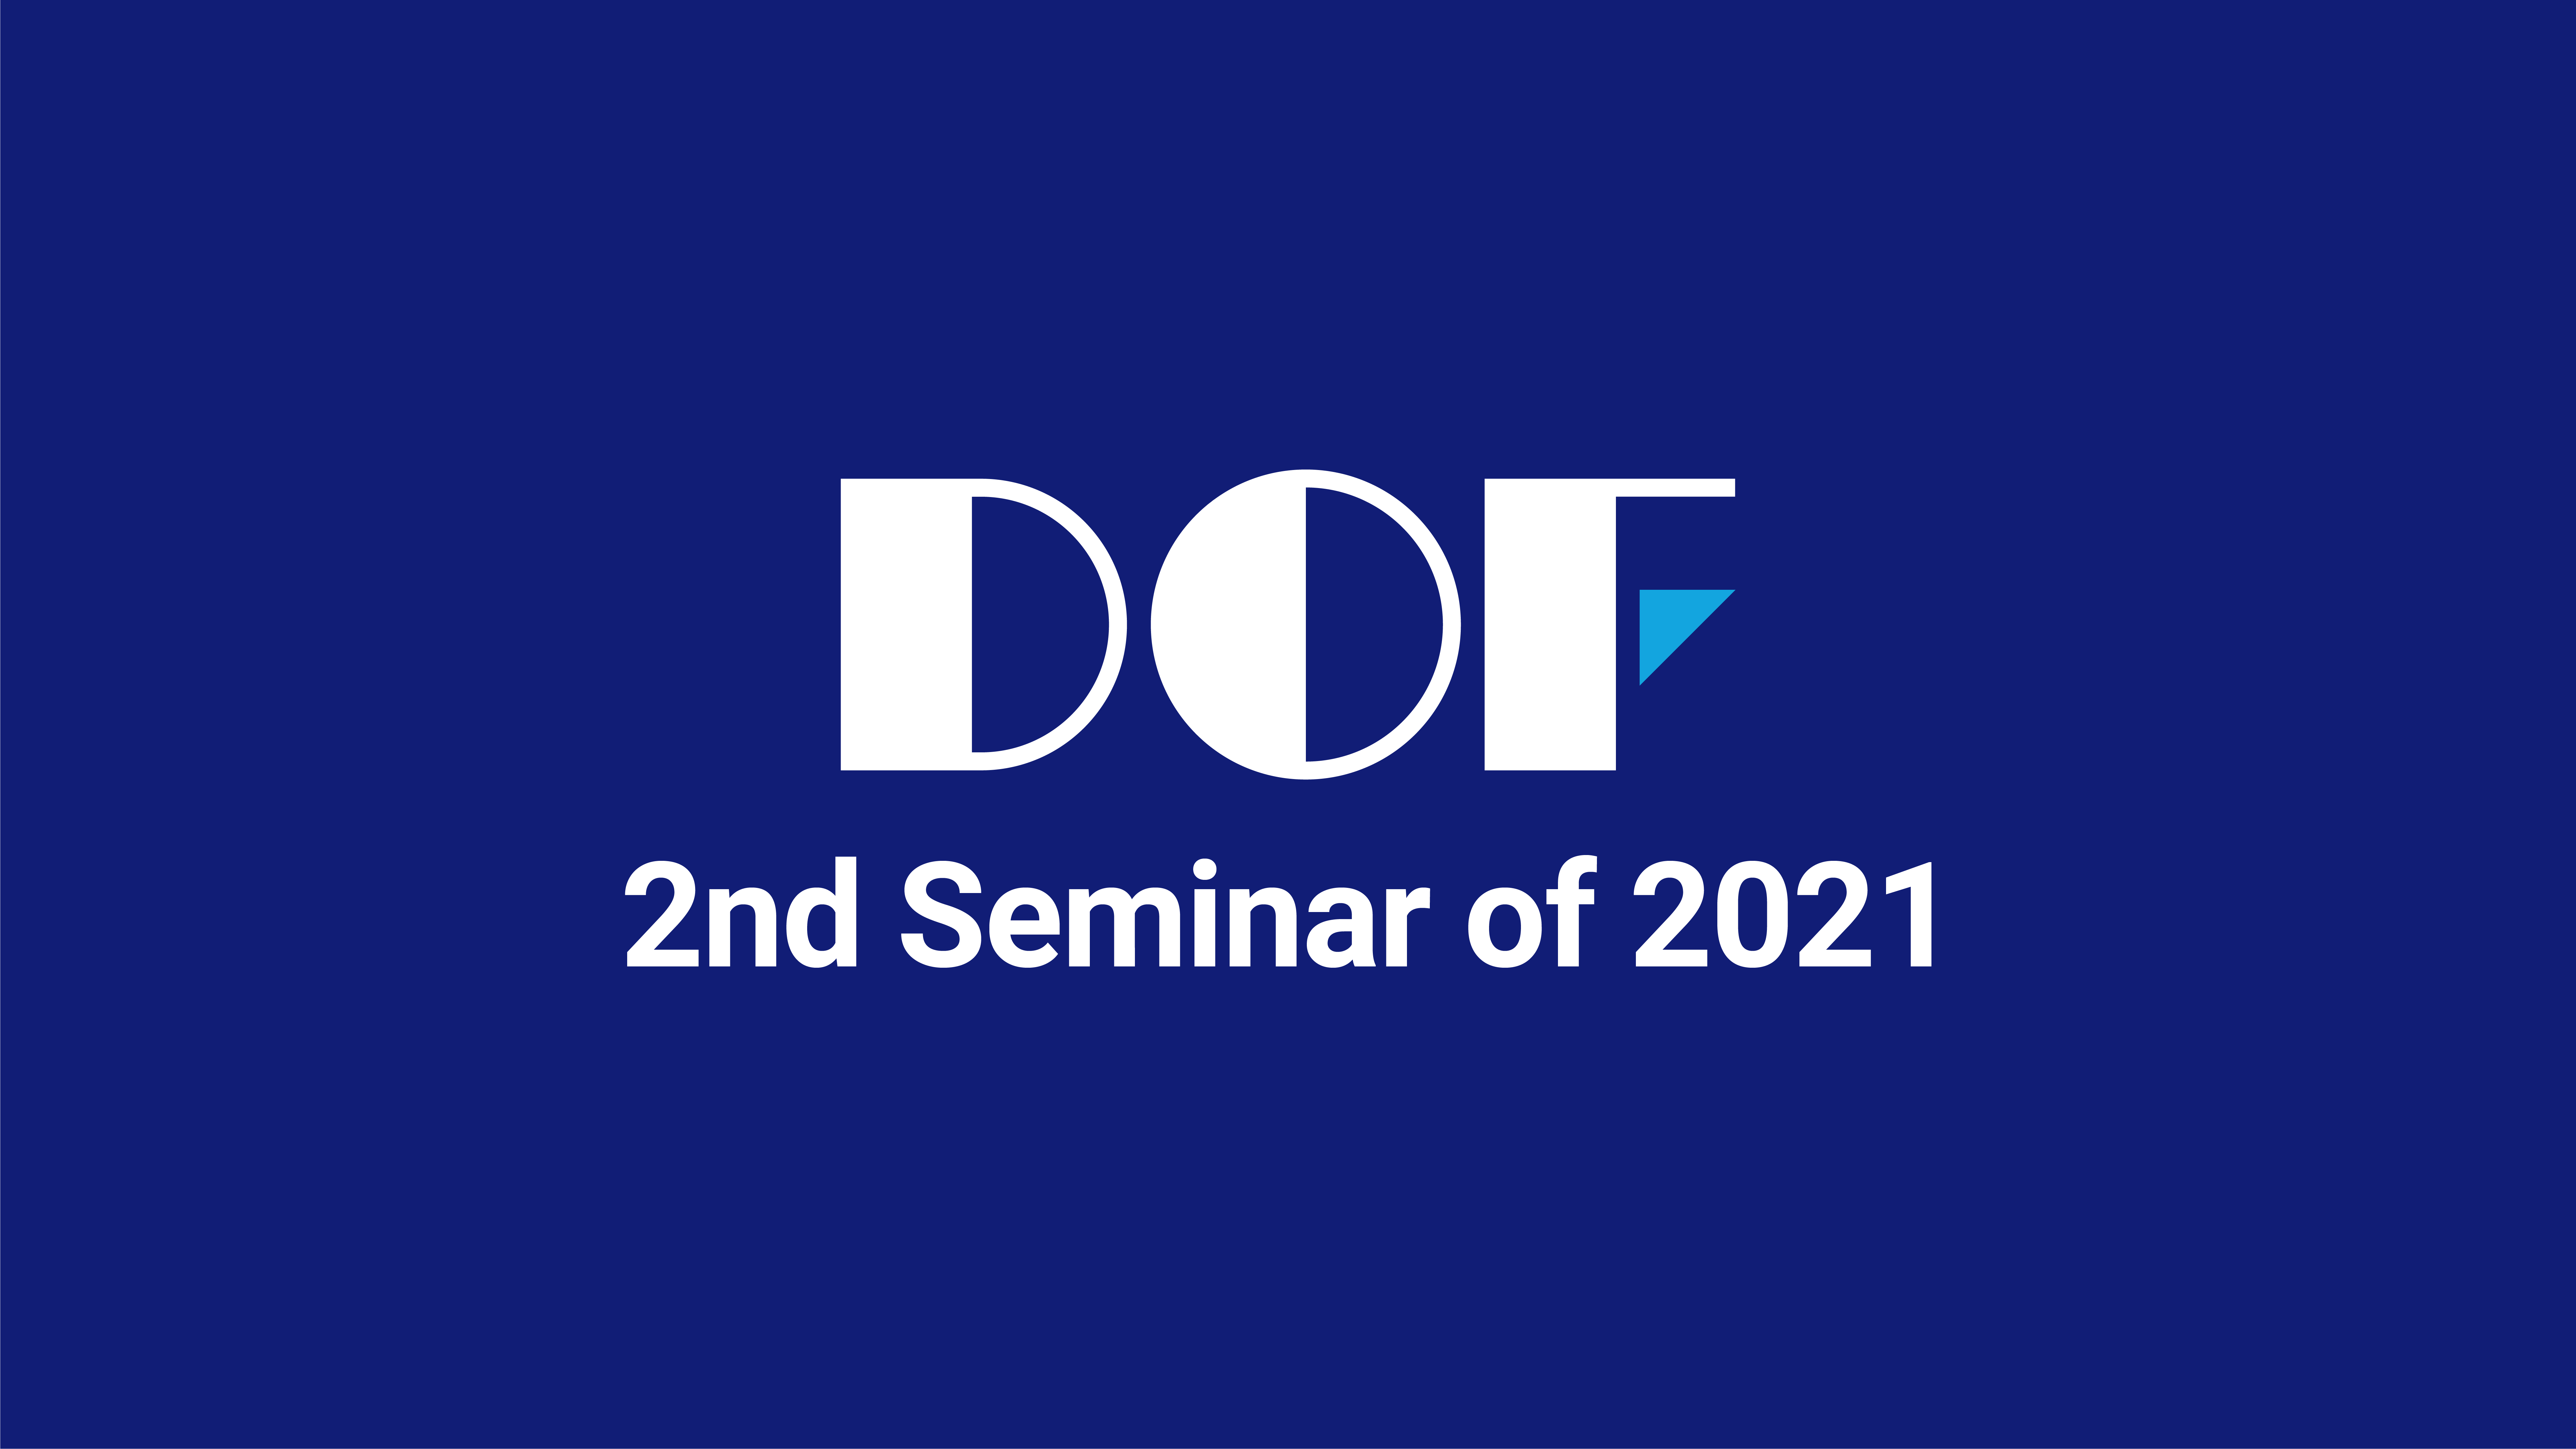 0427_DOF Second Seminar of 2021 Denture_Youtube.png